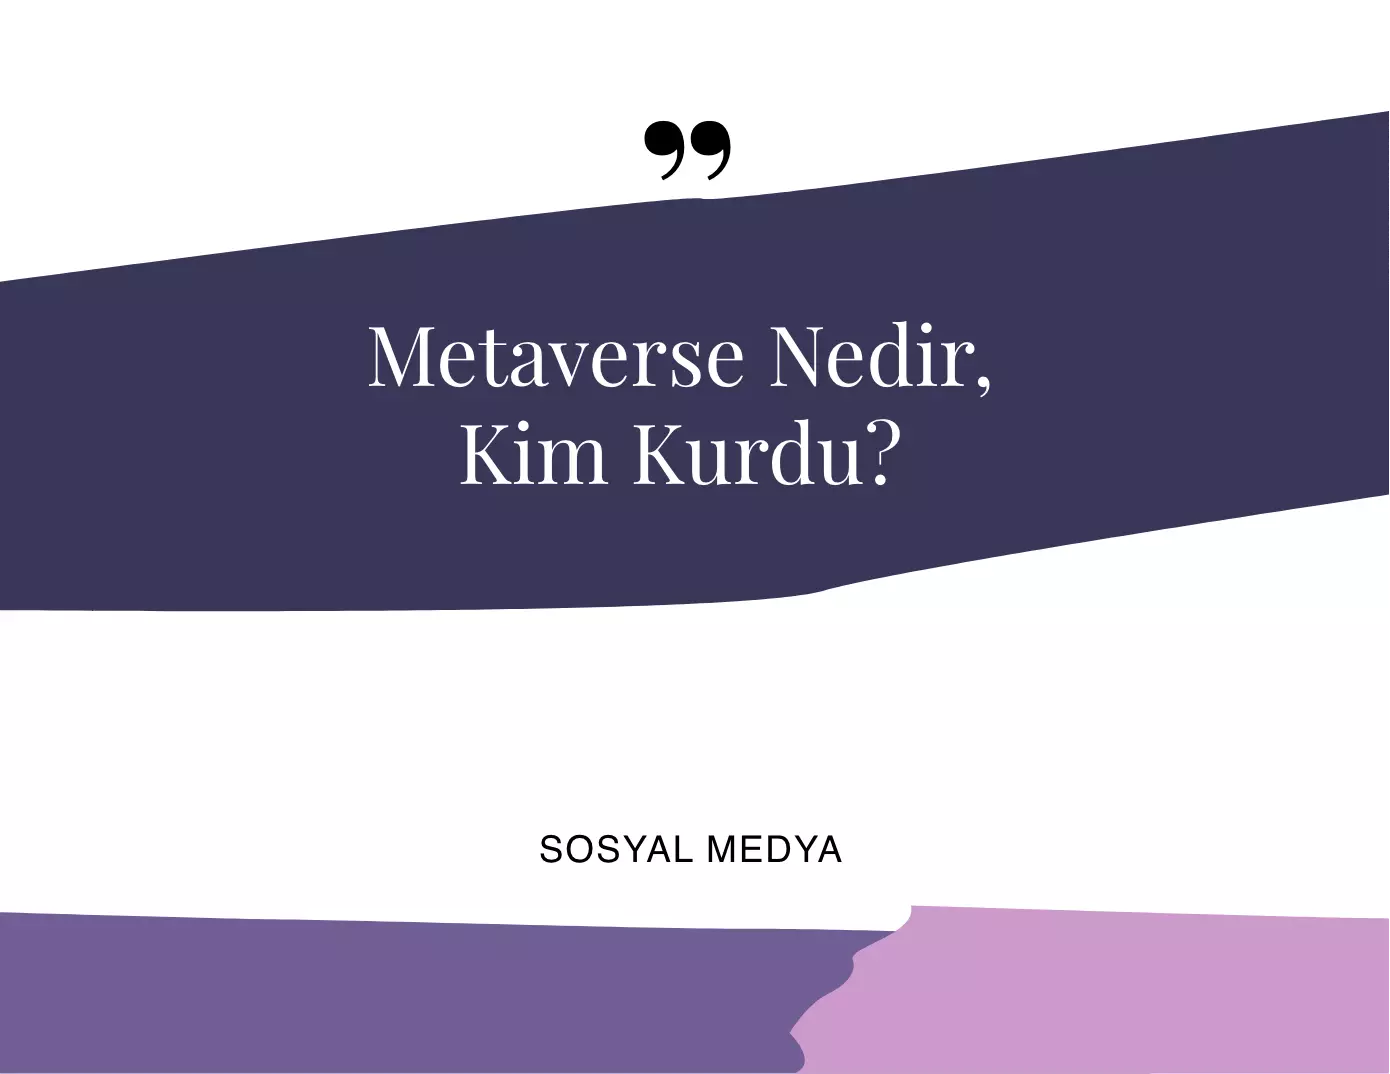 Metaverse Nedir, Metaverse'ü Kim Kurdu?